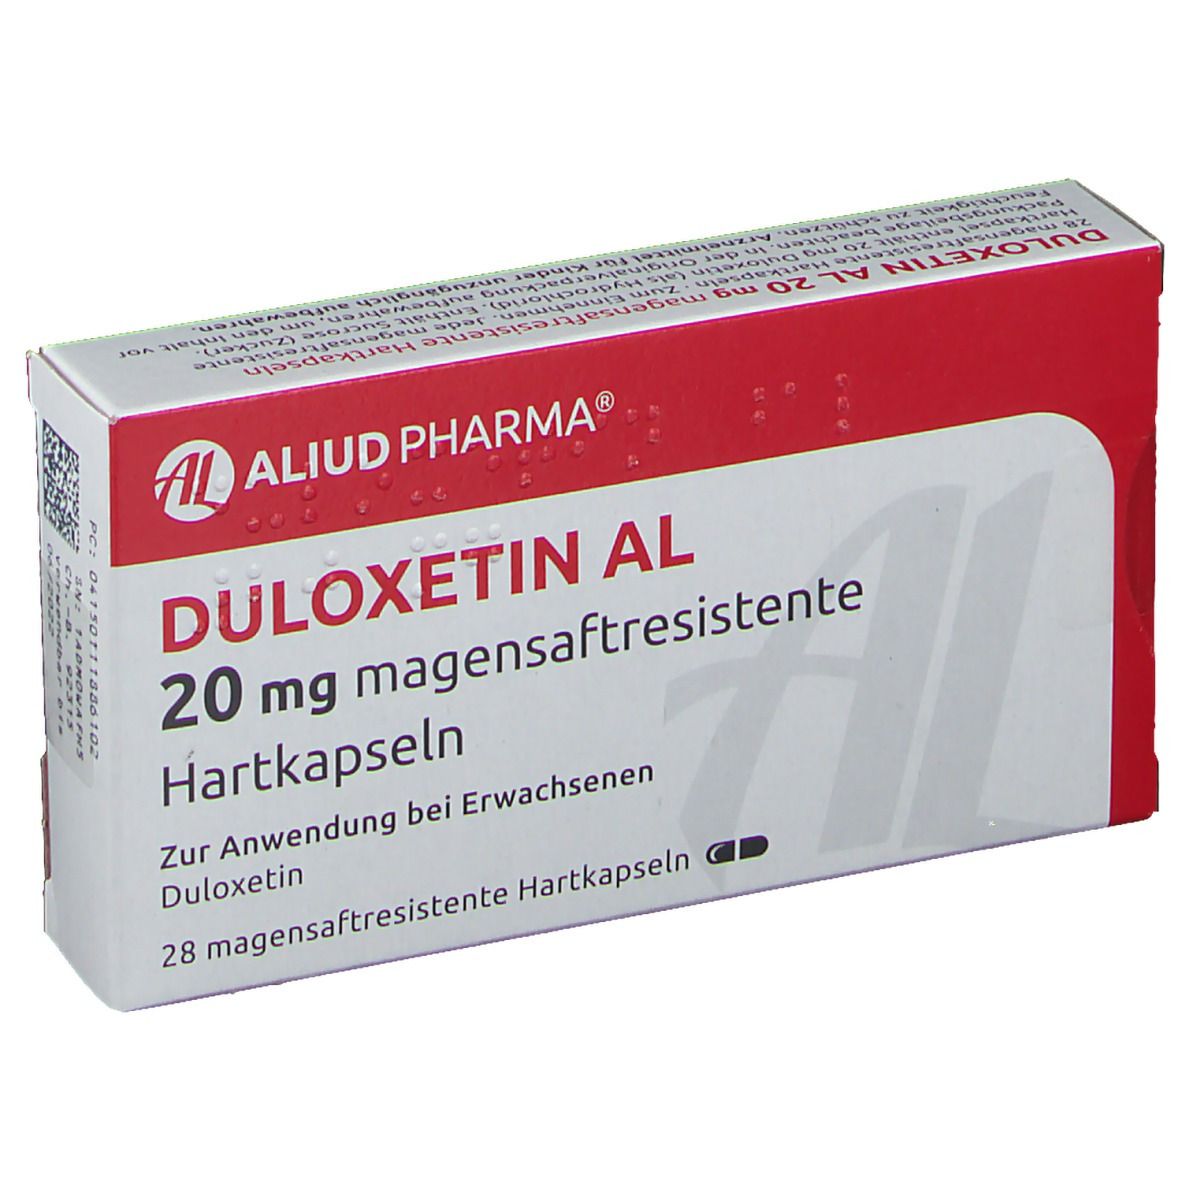 Duloxetin AL 20 mg